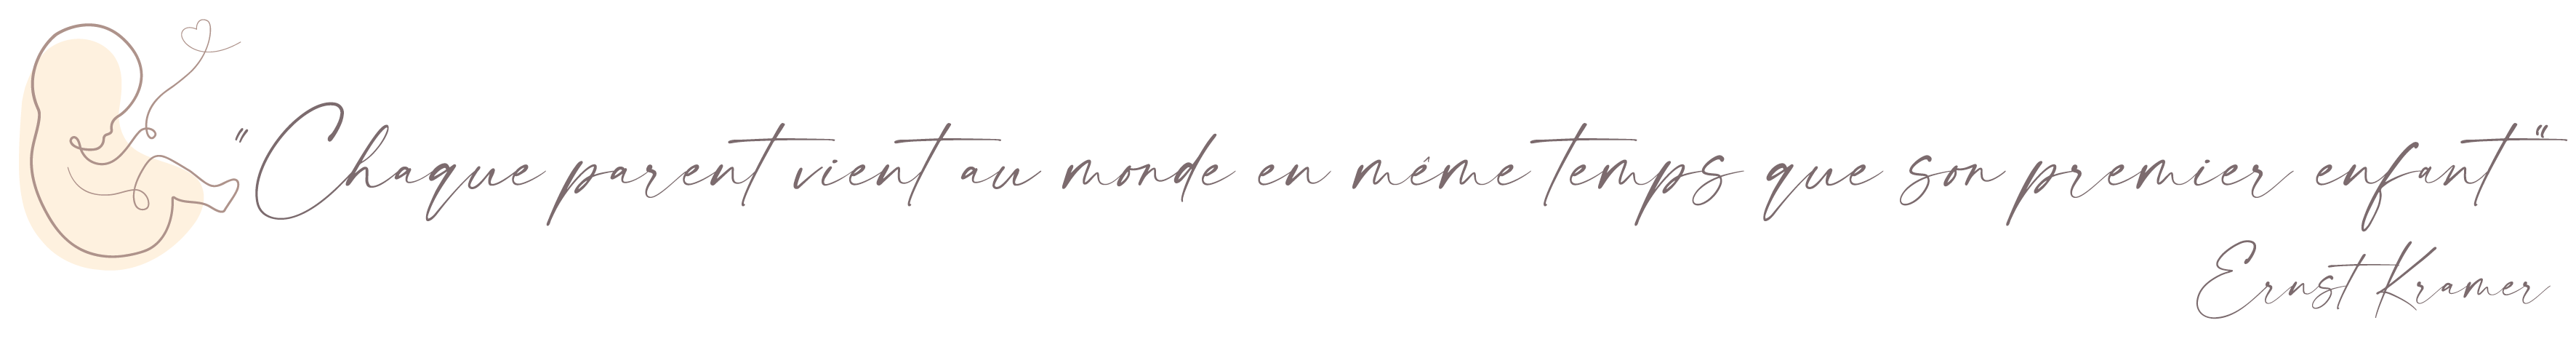 naitre_ensemble_slogan, Roxane Romon